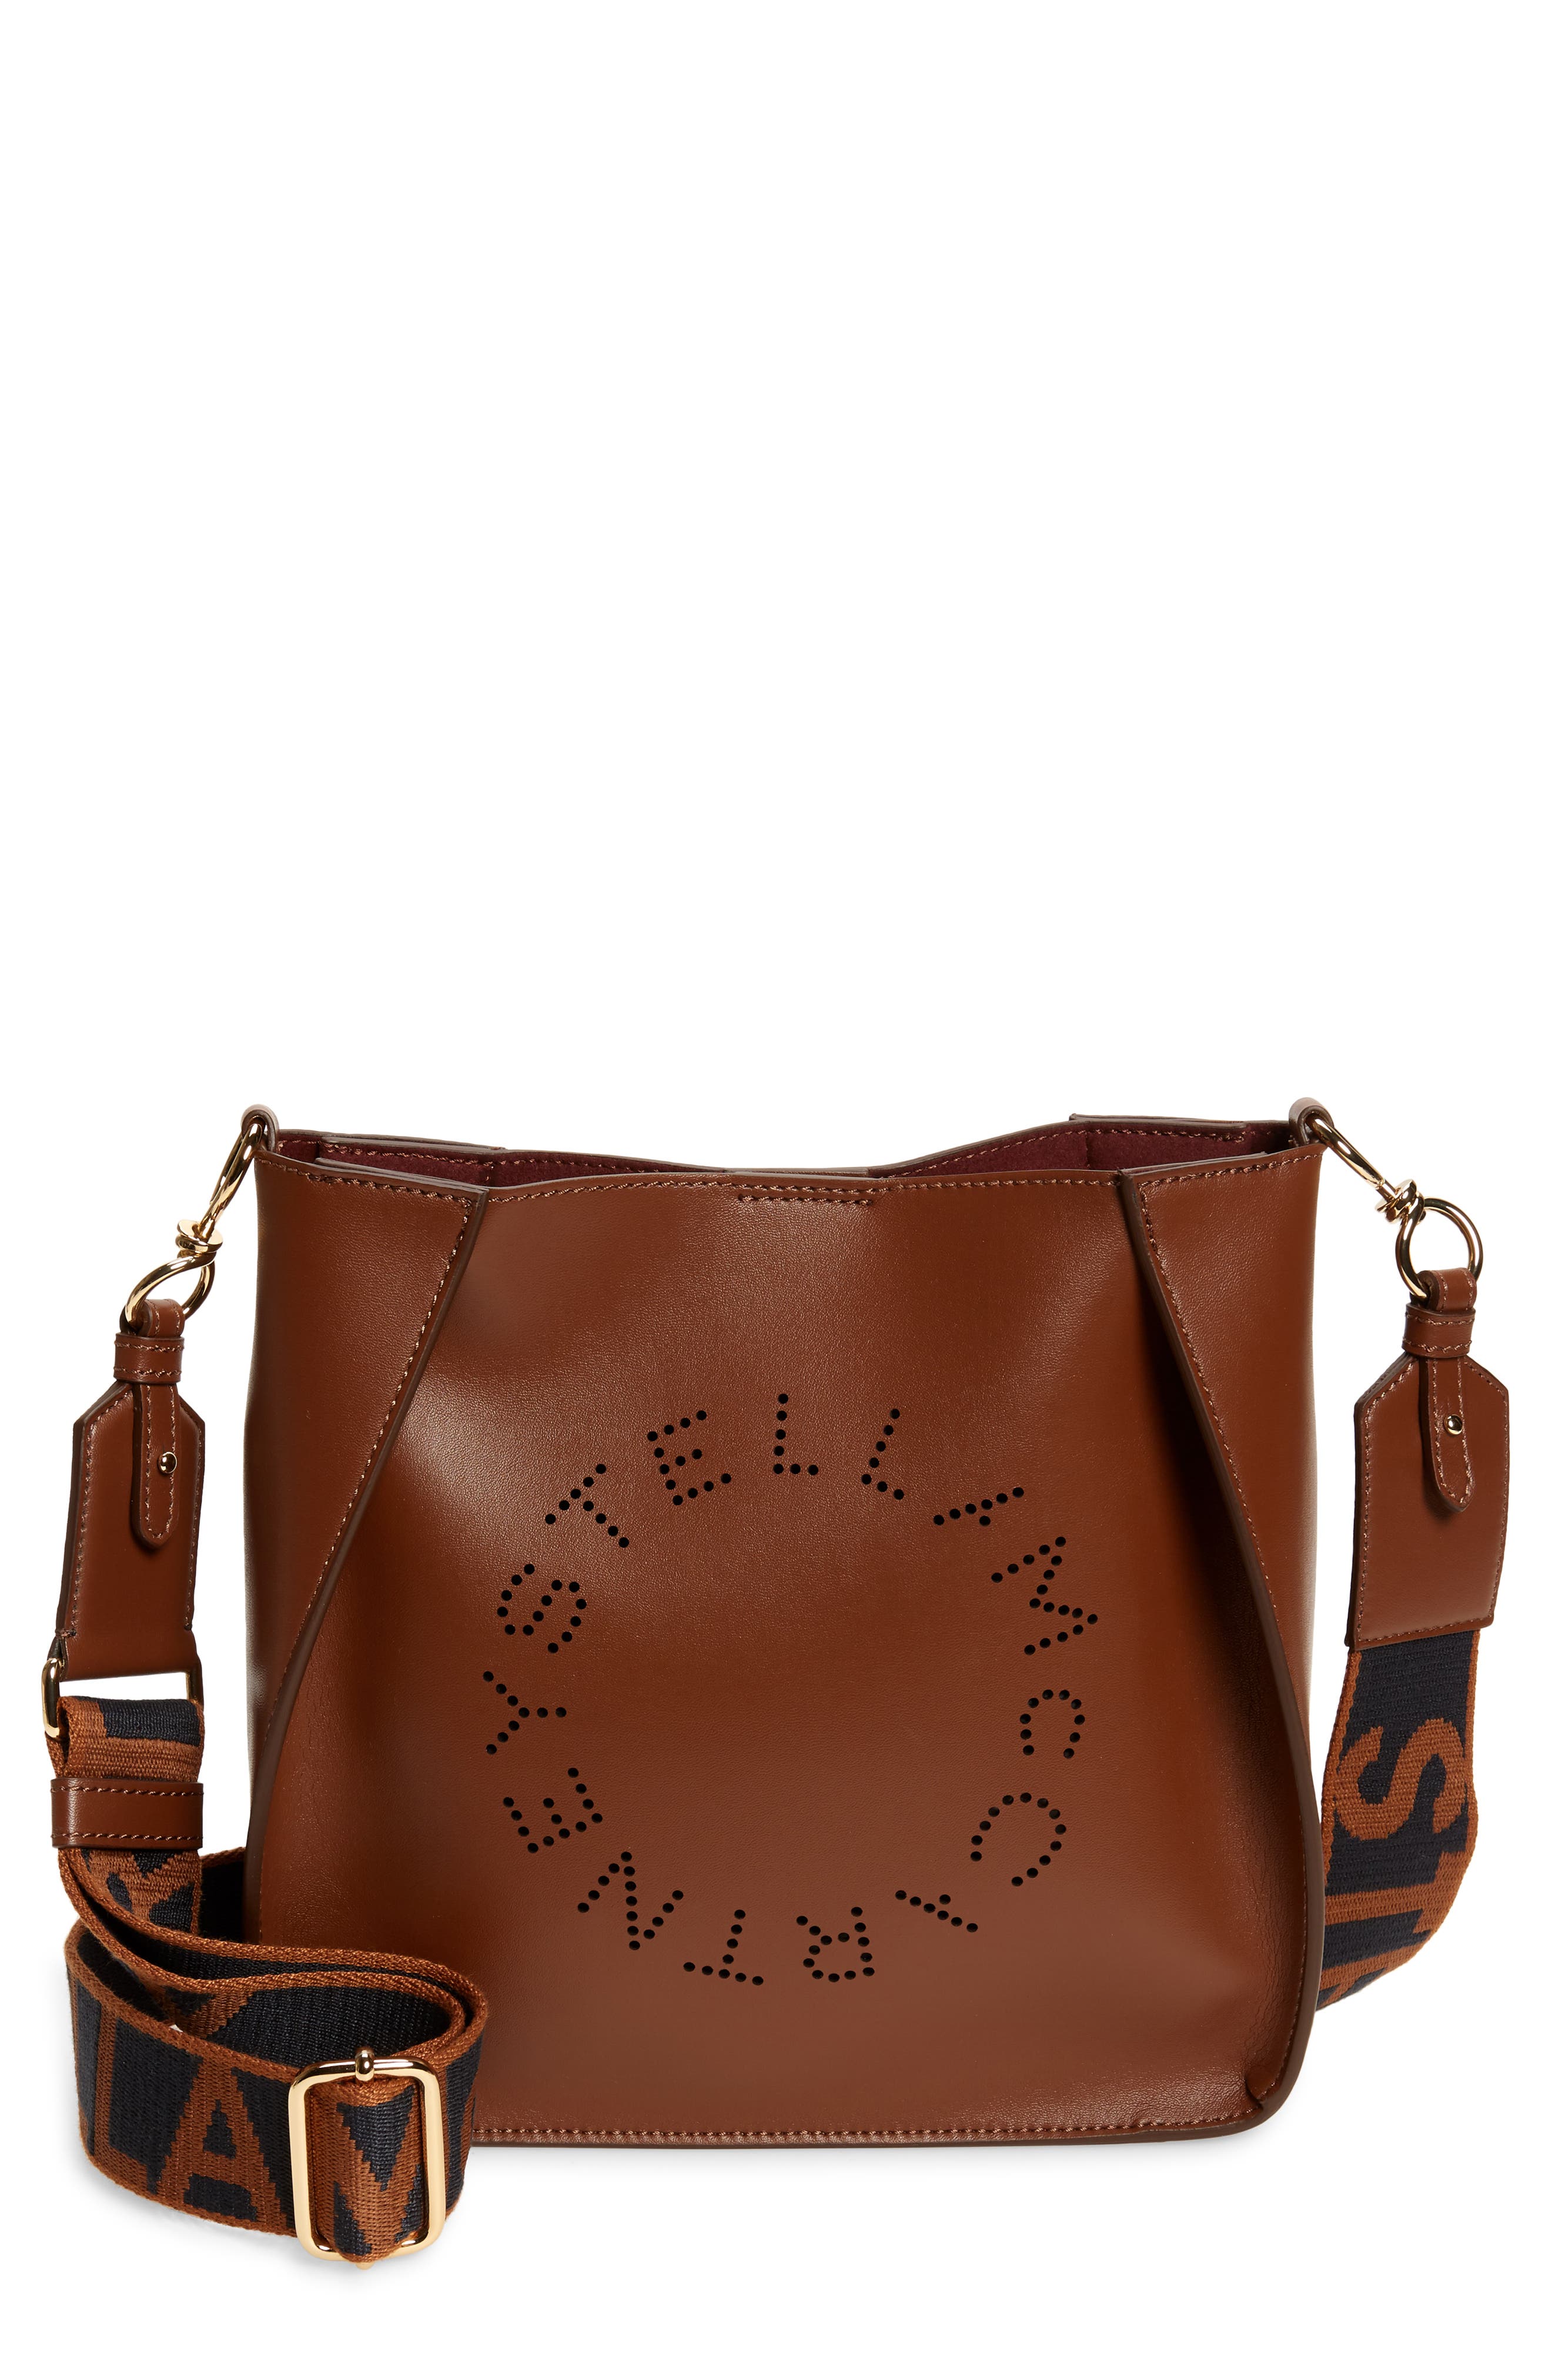 Faux Leather Designer Handbag Shoulder Bag For Women Womens Bags Handbags - Brown - 1 x Glue 